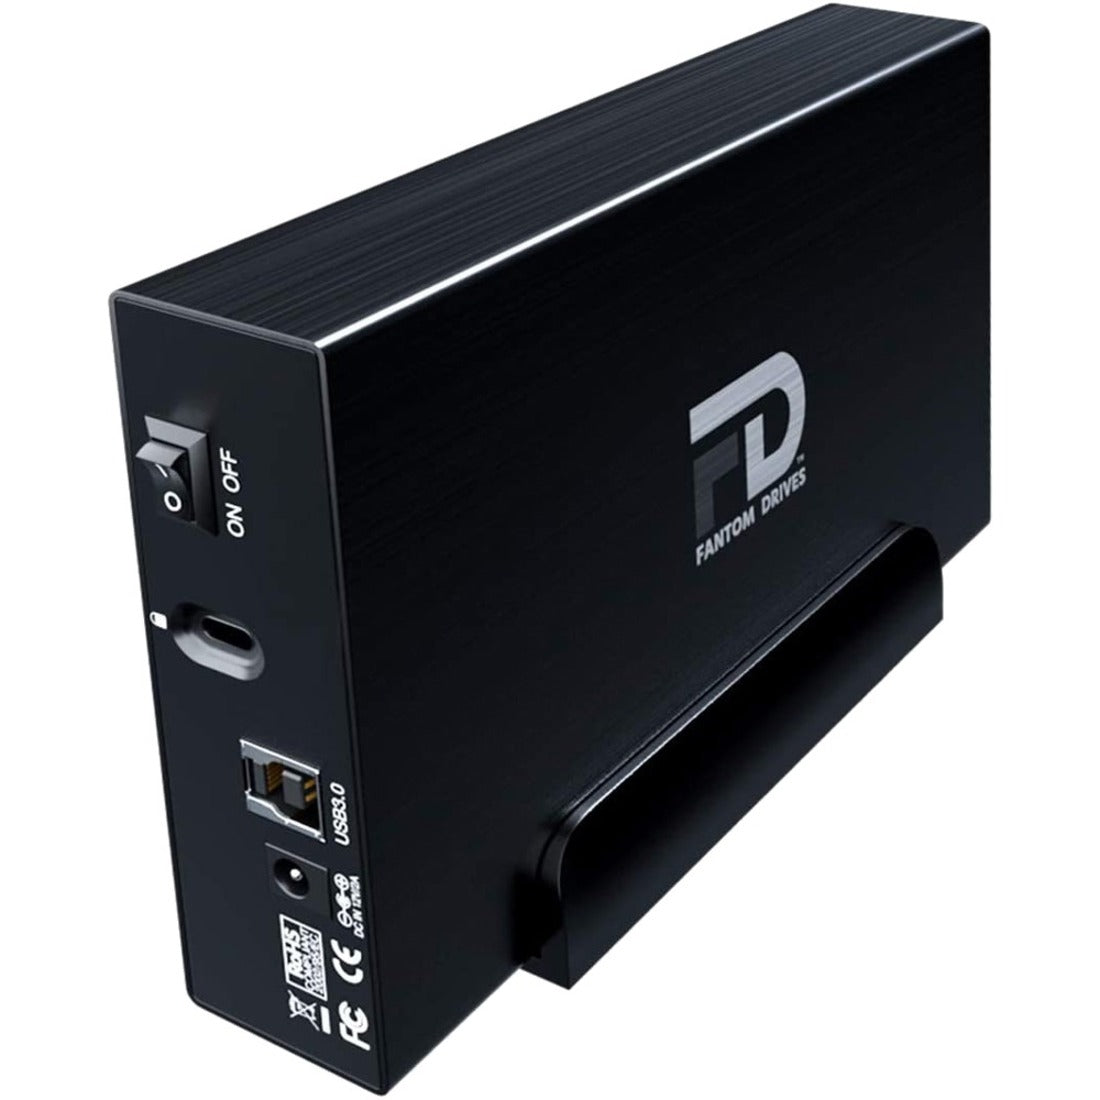 Fantom Drives 1TB External Hard Drive - GFORCE 3 - 32MB Cache USB 3 Aluminum Black GF3B1000U32